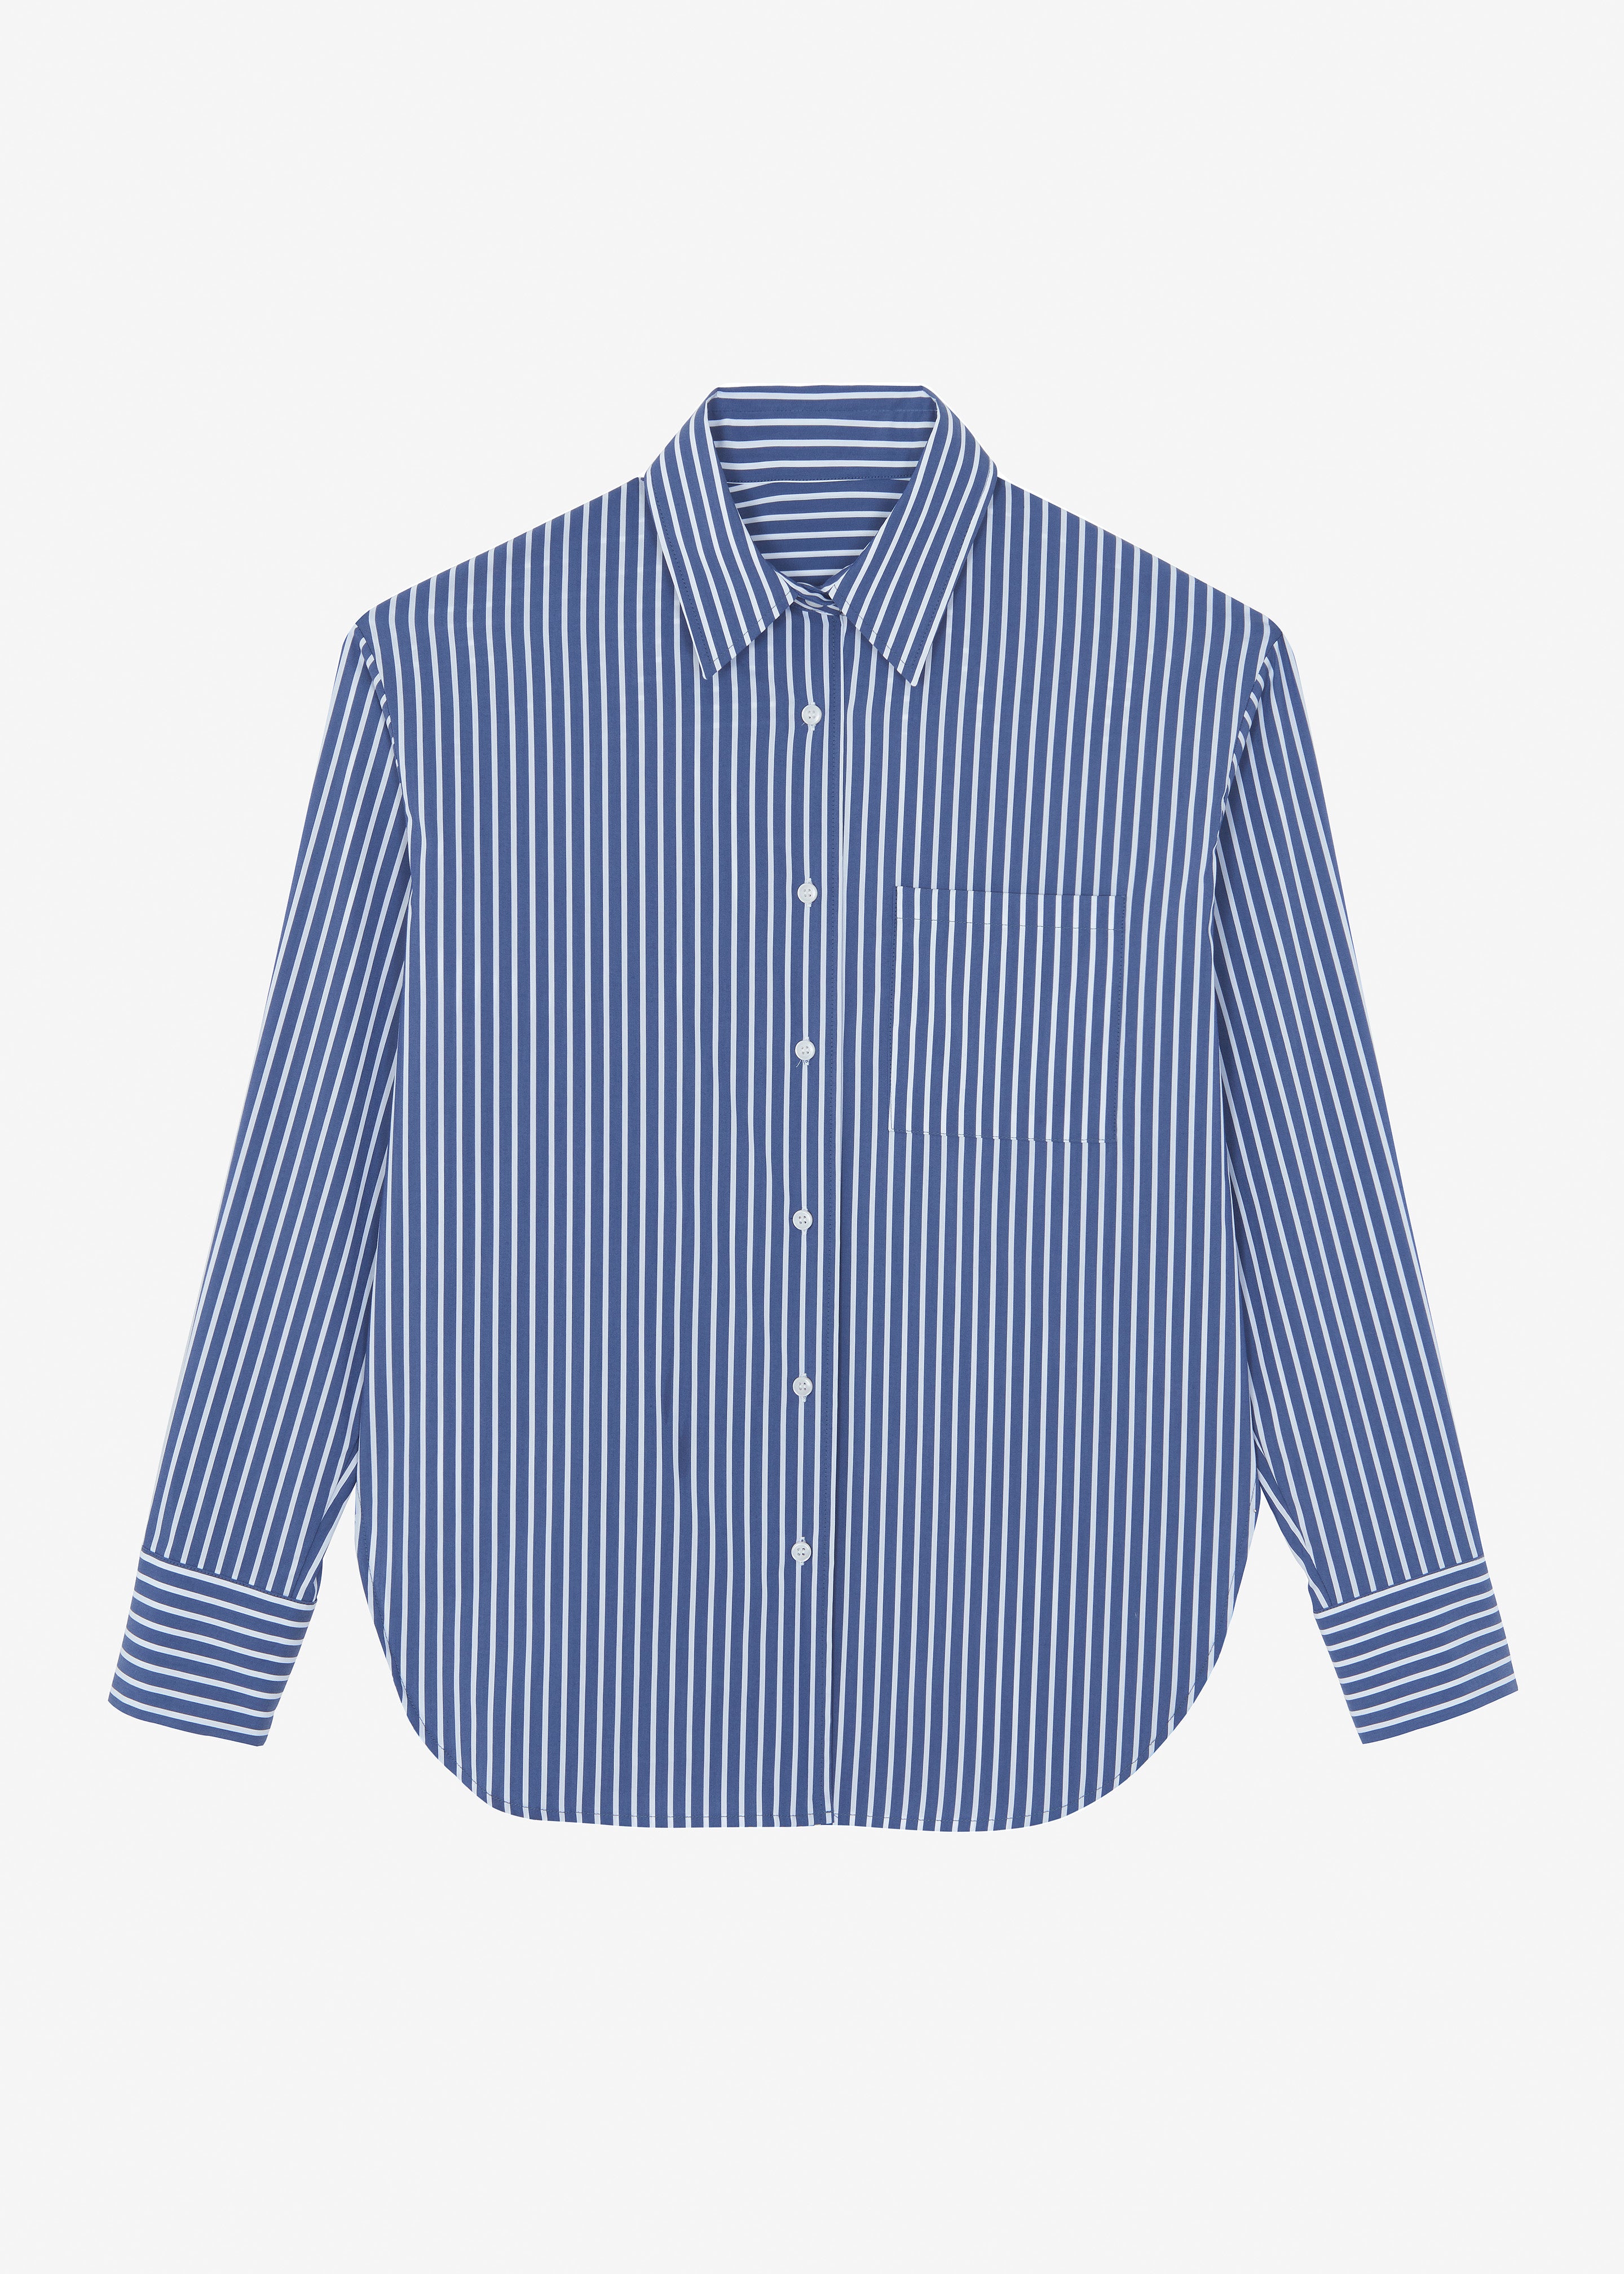 Lui Thin Stripe Shirt - Navy Stripe - 6